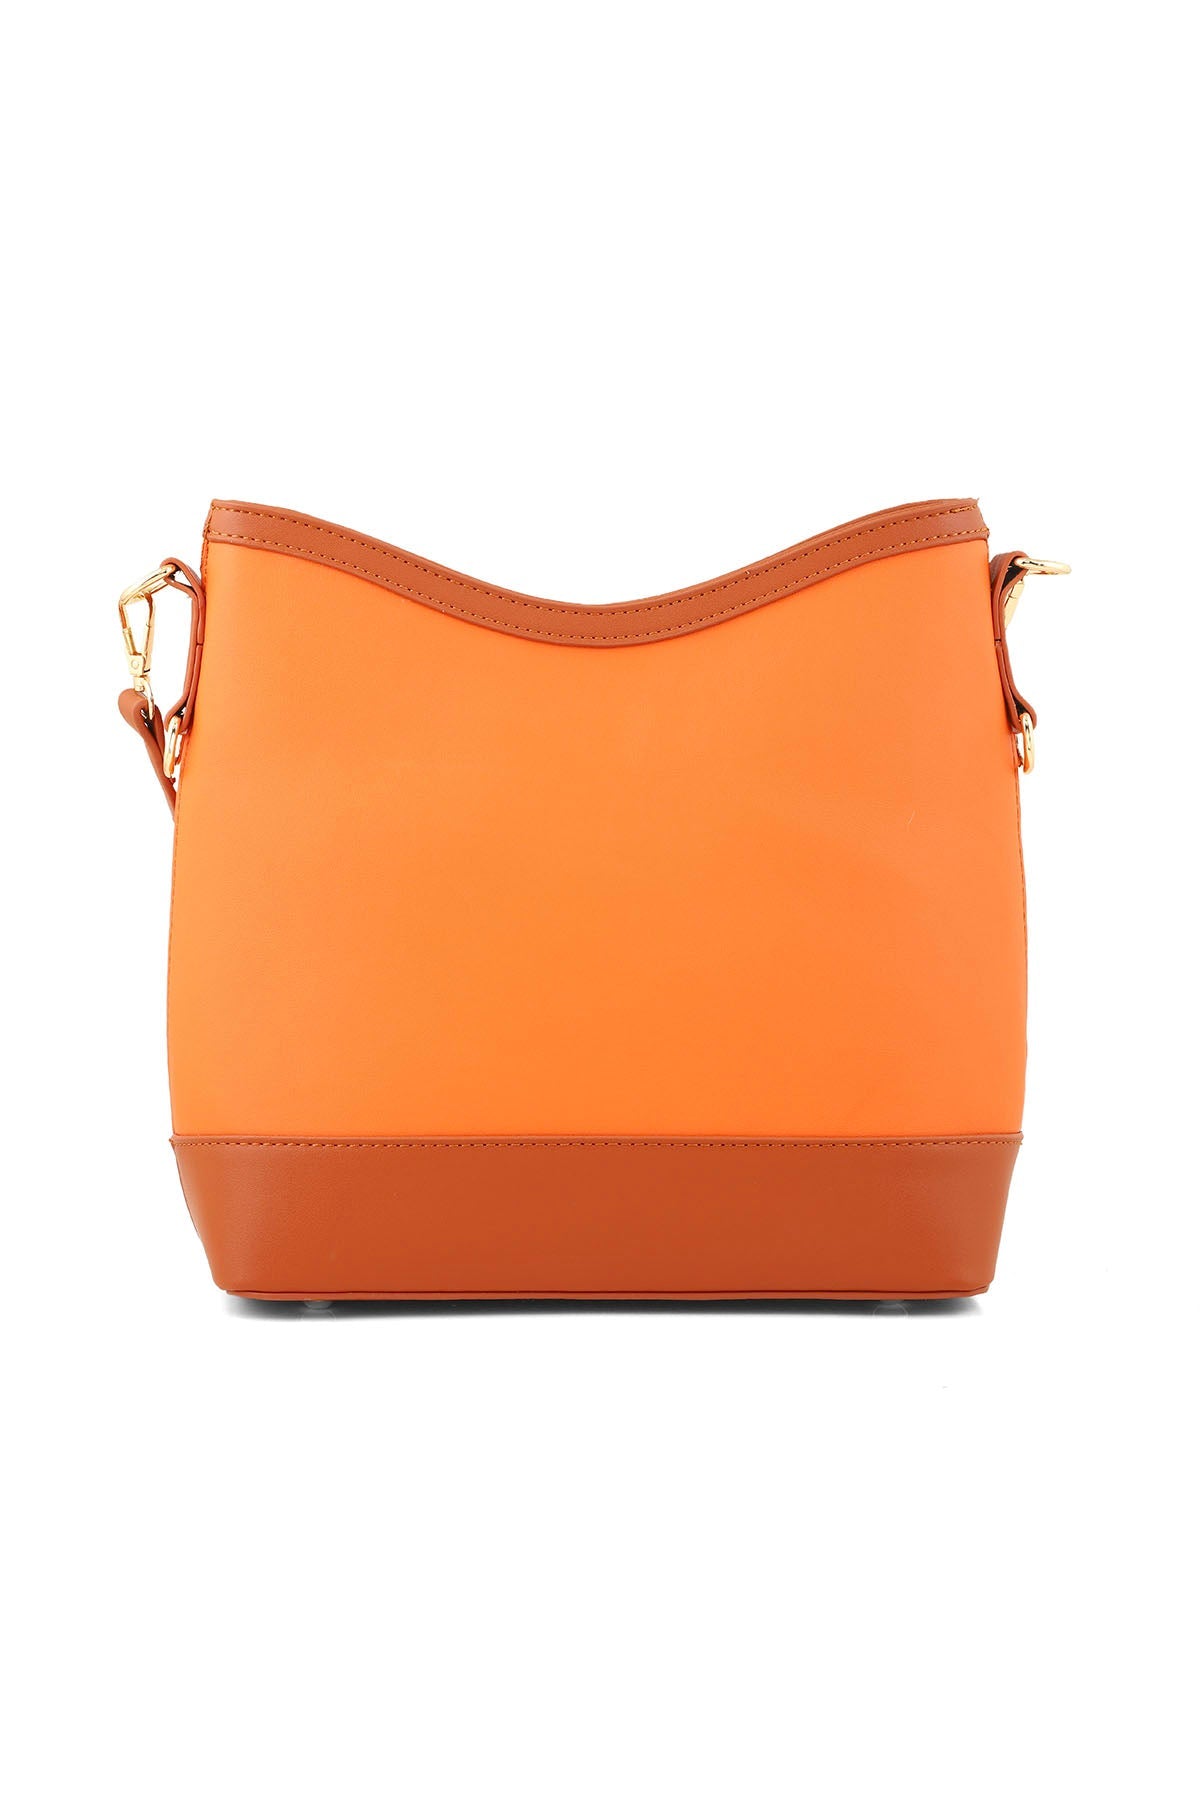 Bucket Hand Bags B15130-Orange